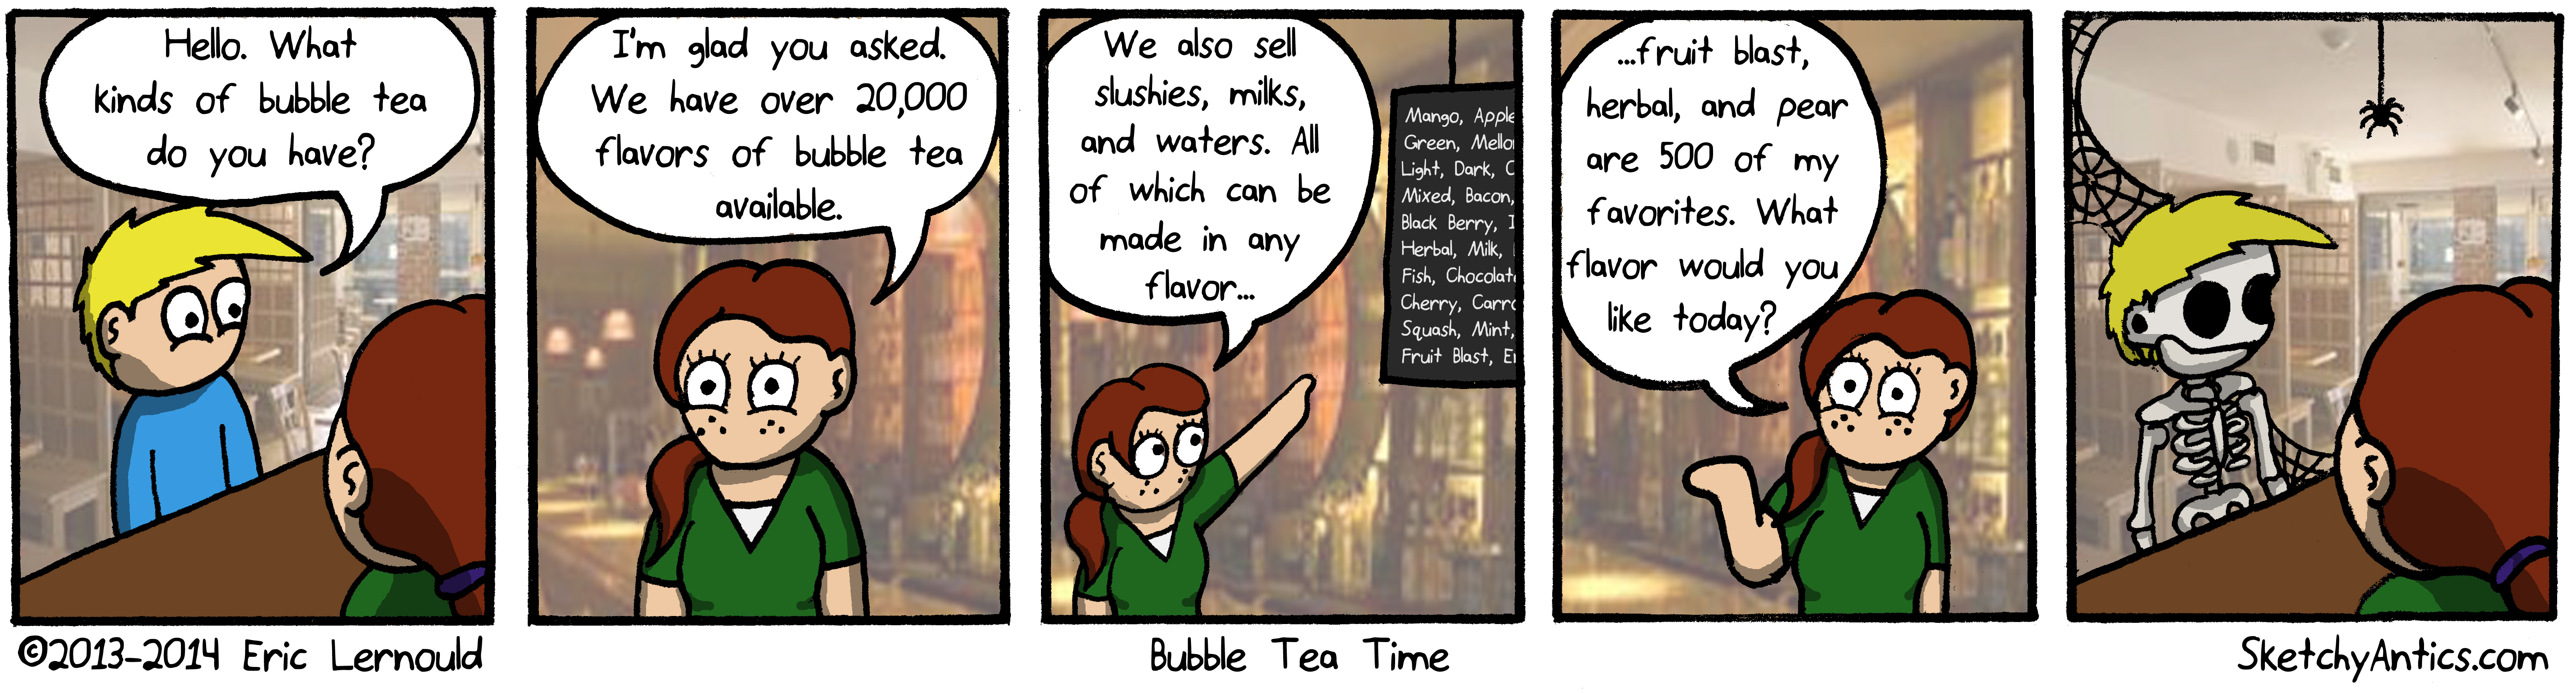 Image result for bubble tea time sketchyantics